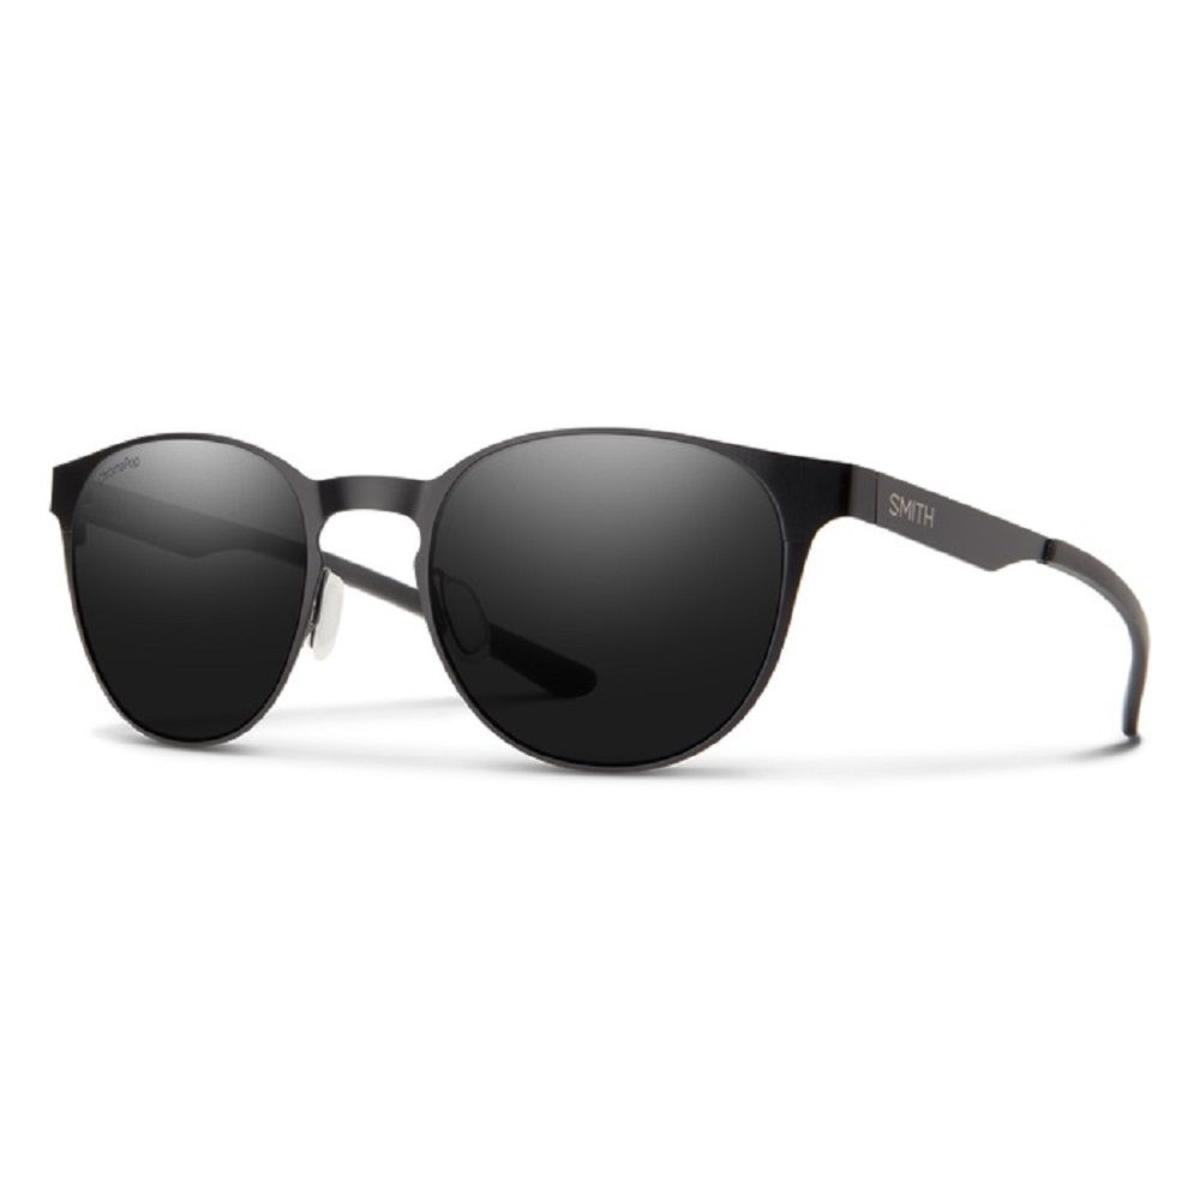 Smith Optics Eastbank Metal Sunglasses ChromaPop Polarized Black - Matte Black Frame